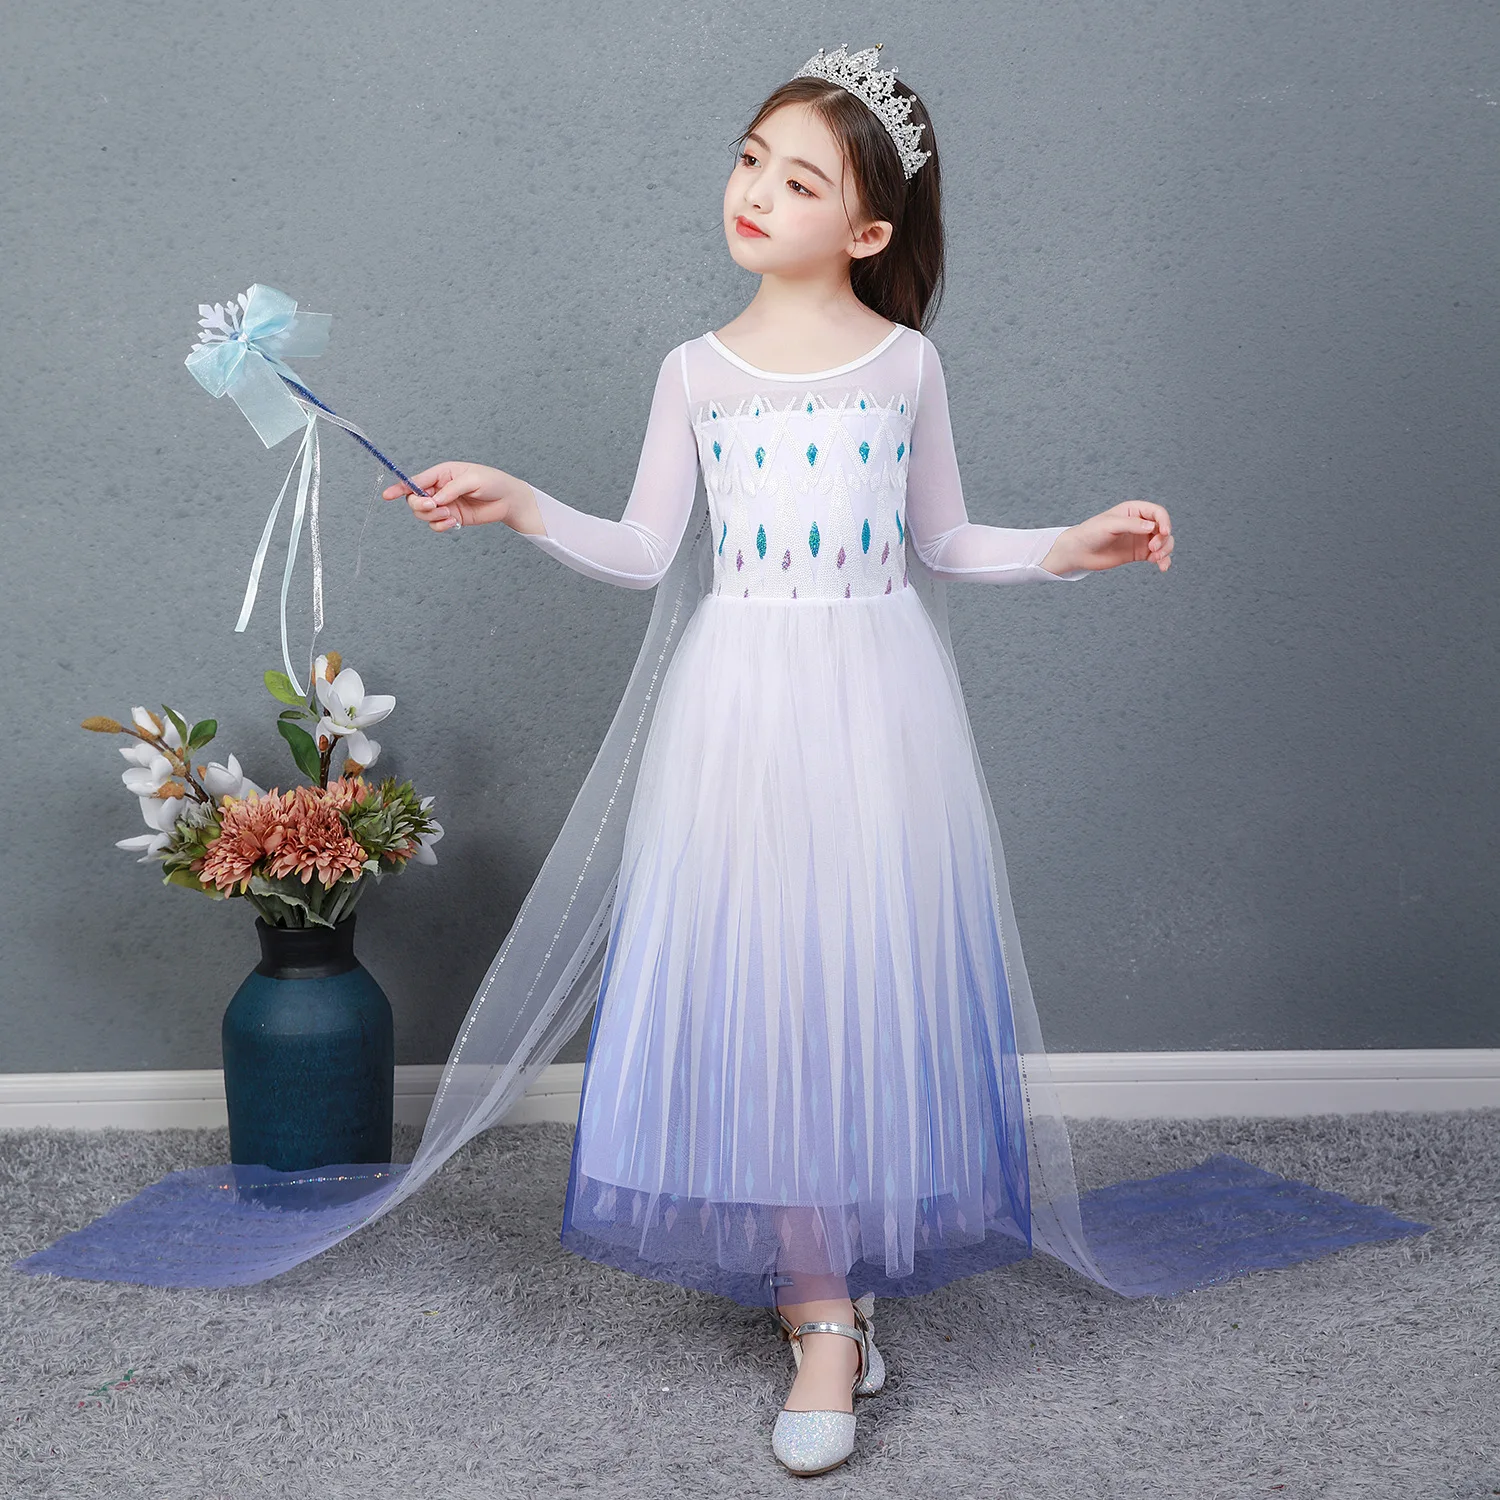 

MQATZ Kids girl Fancy Cosplay long cape Cosplay Party Princess Elsa Dress Costume, White